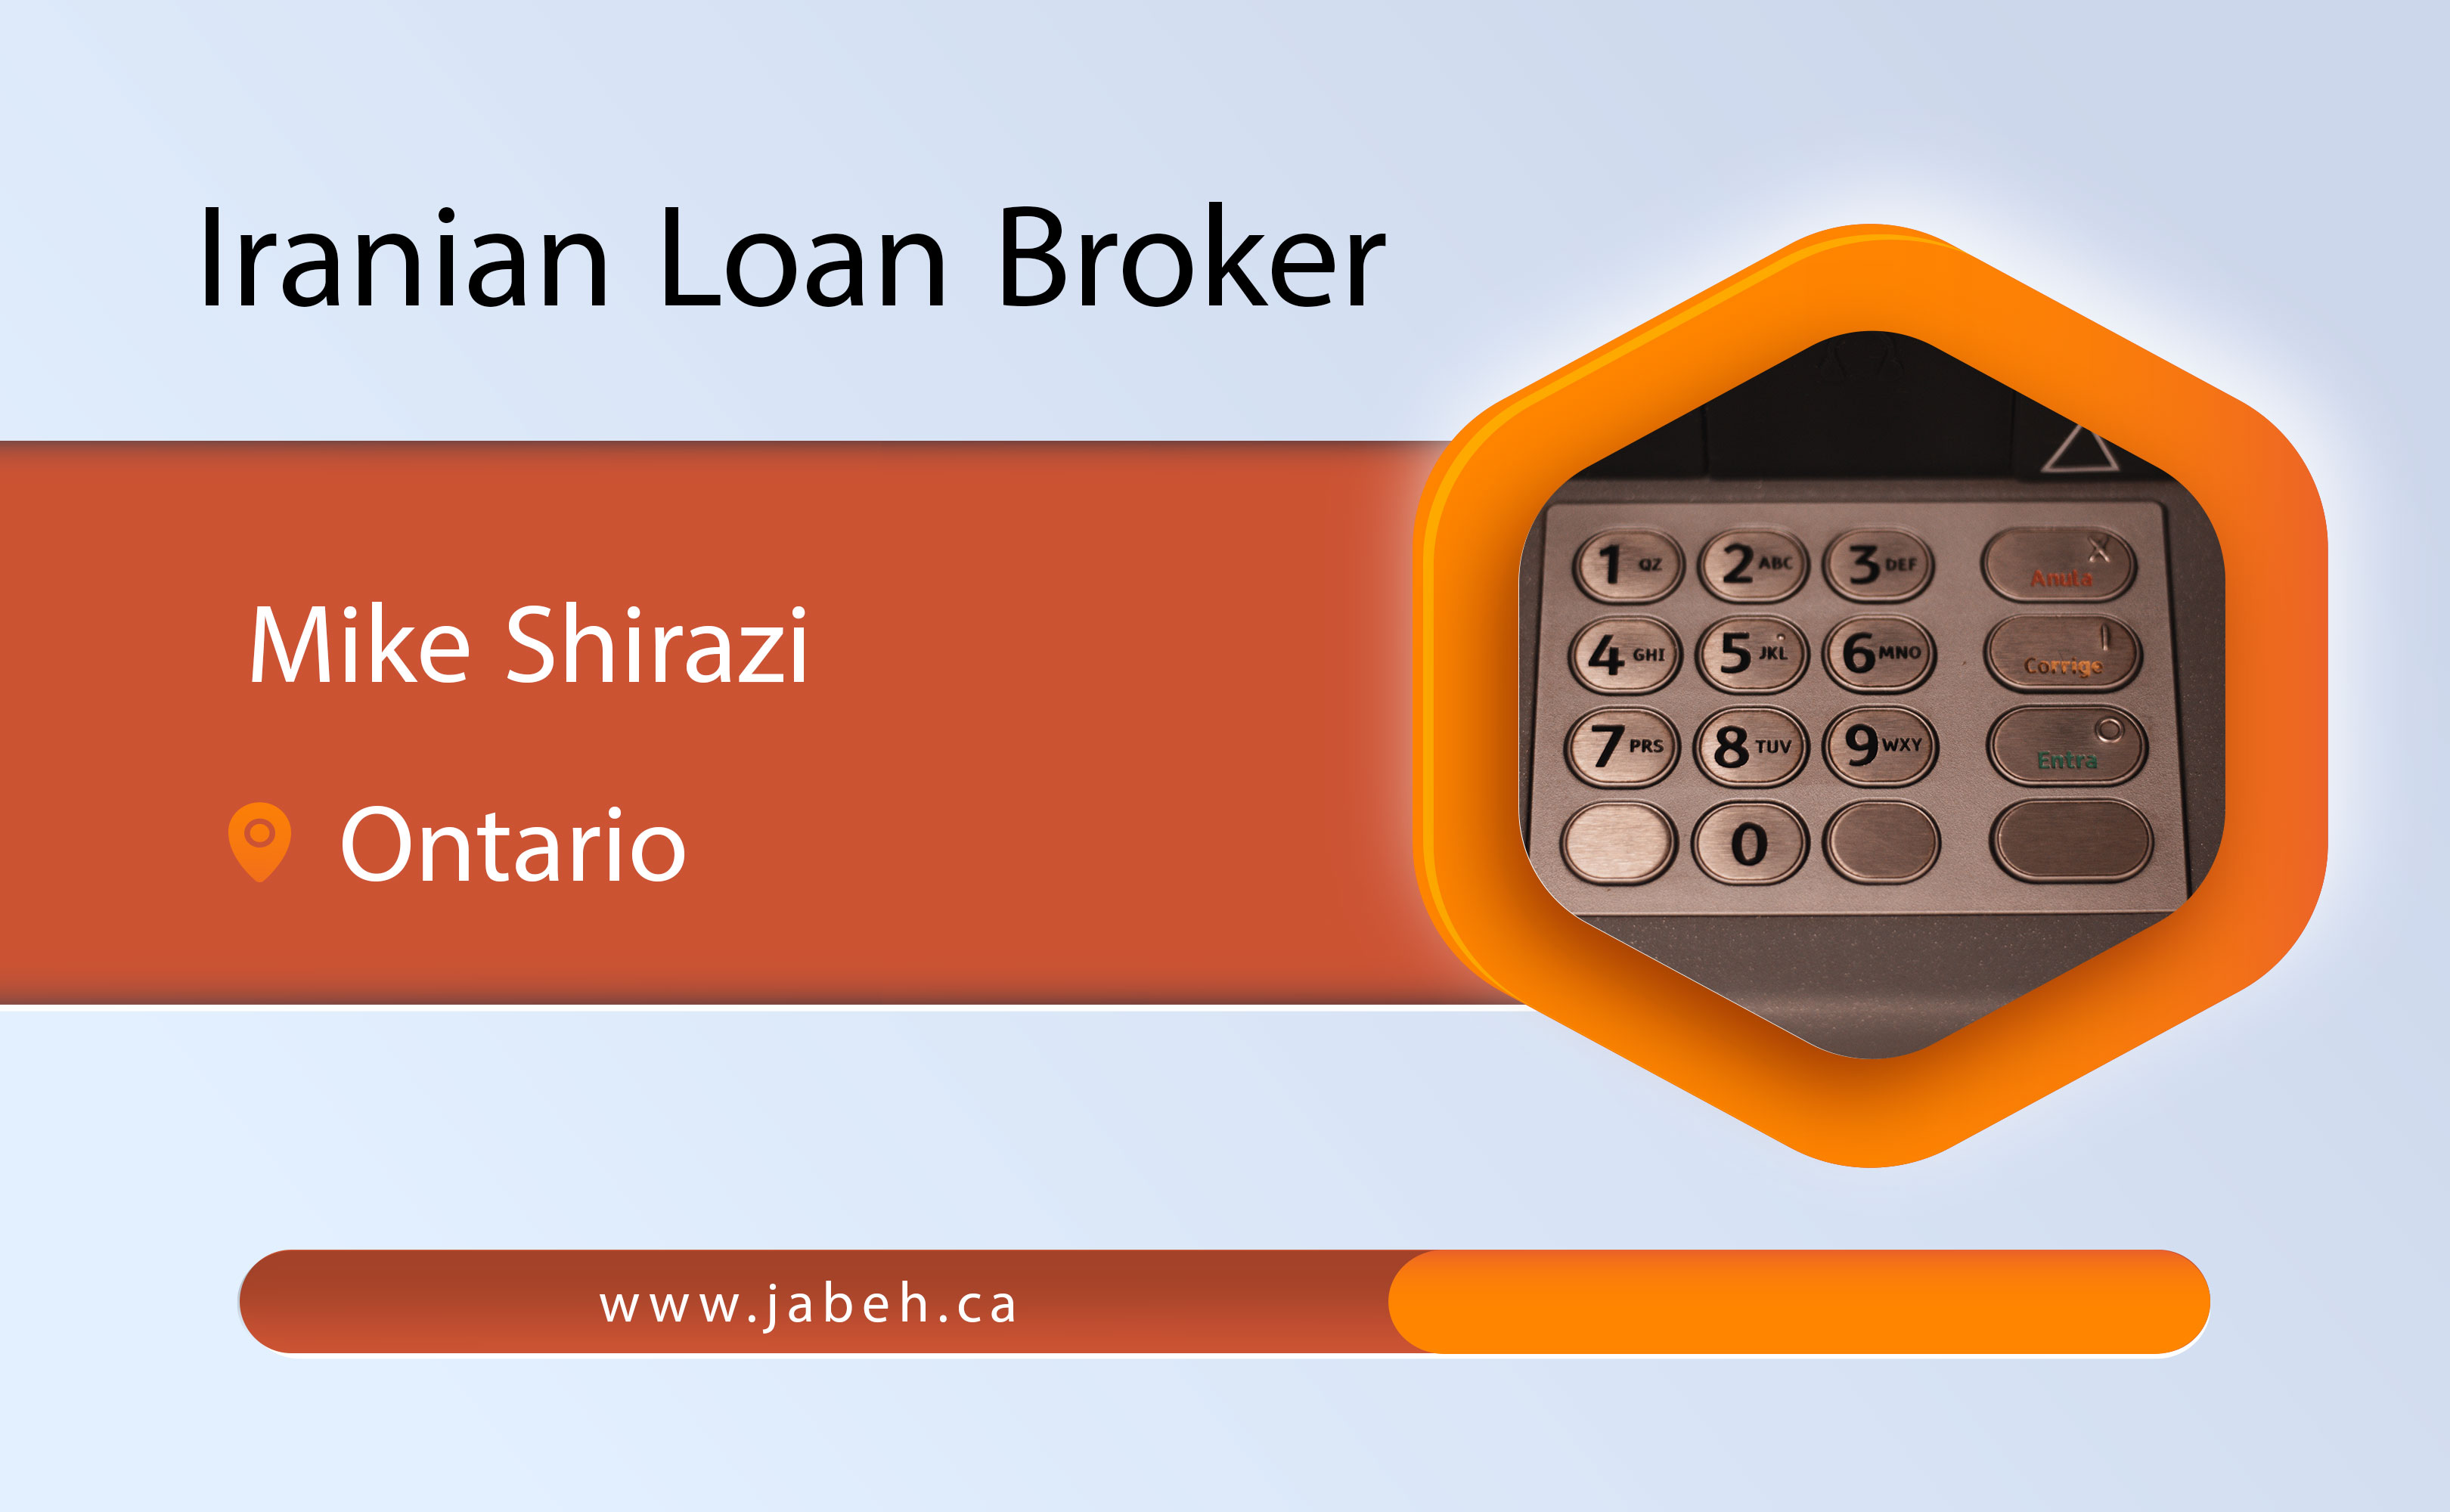 Iranian loan broker Mike Shirazi in Ontario